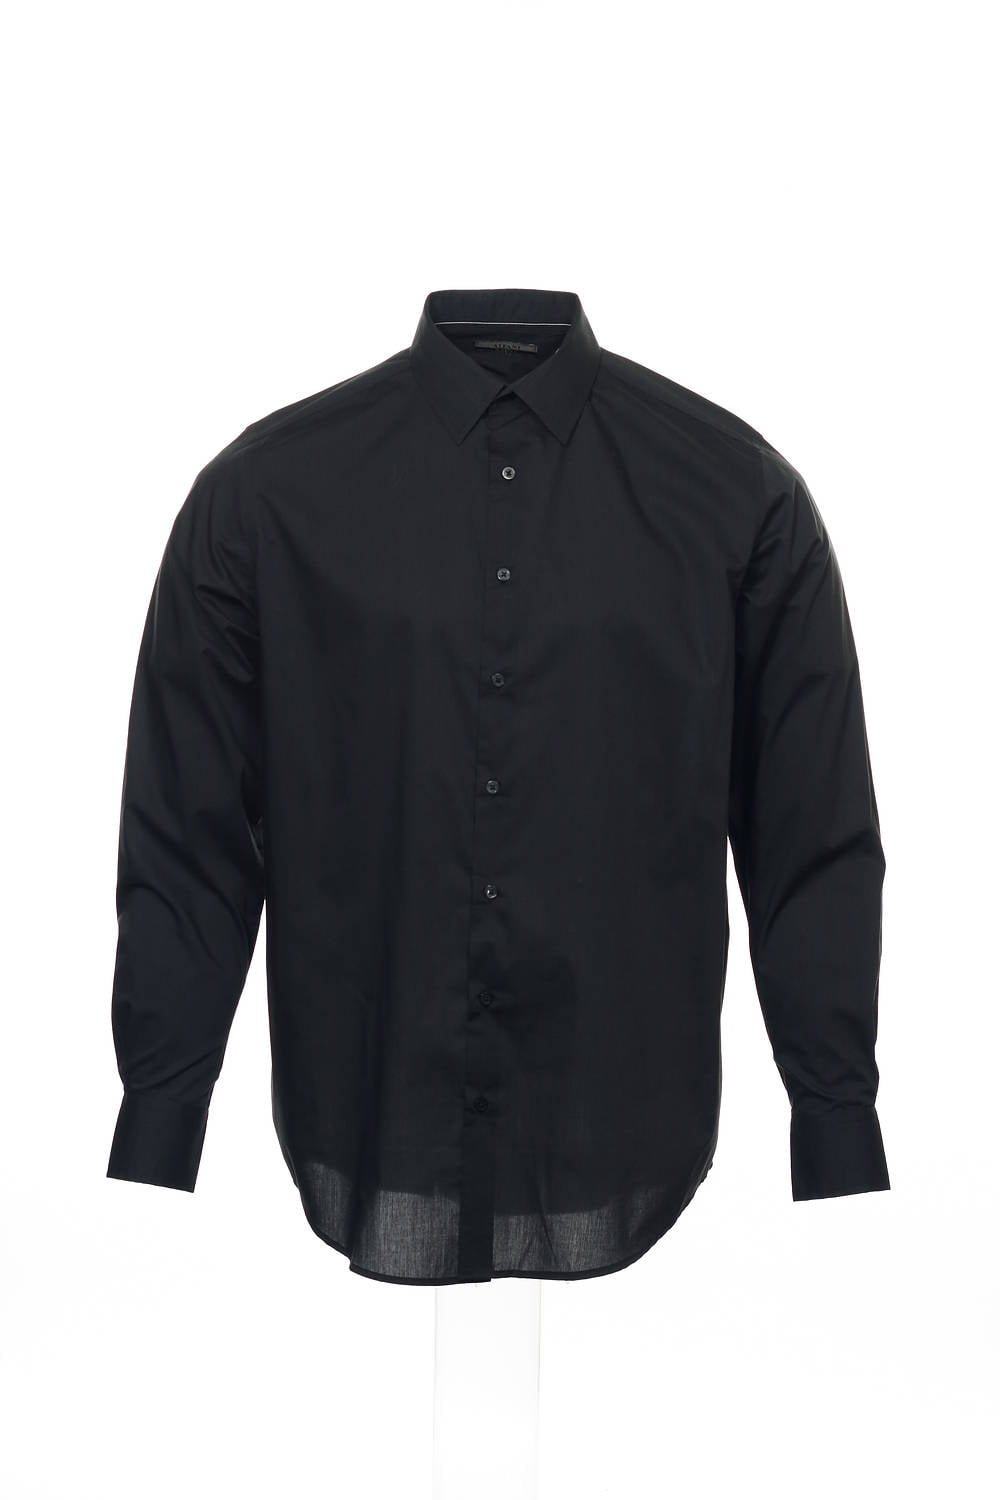 Black Pinstripe Button Down Shirt 